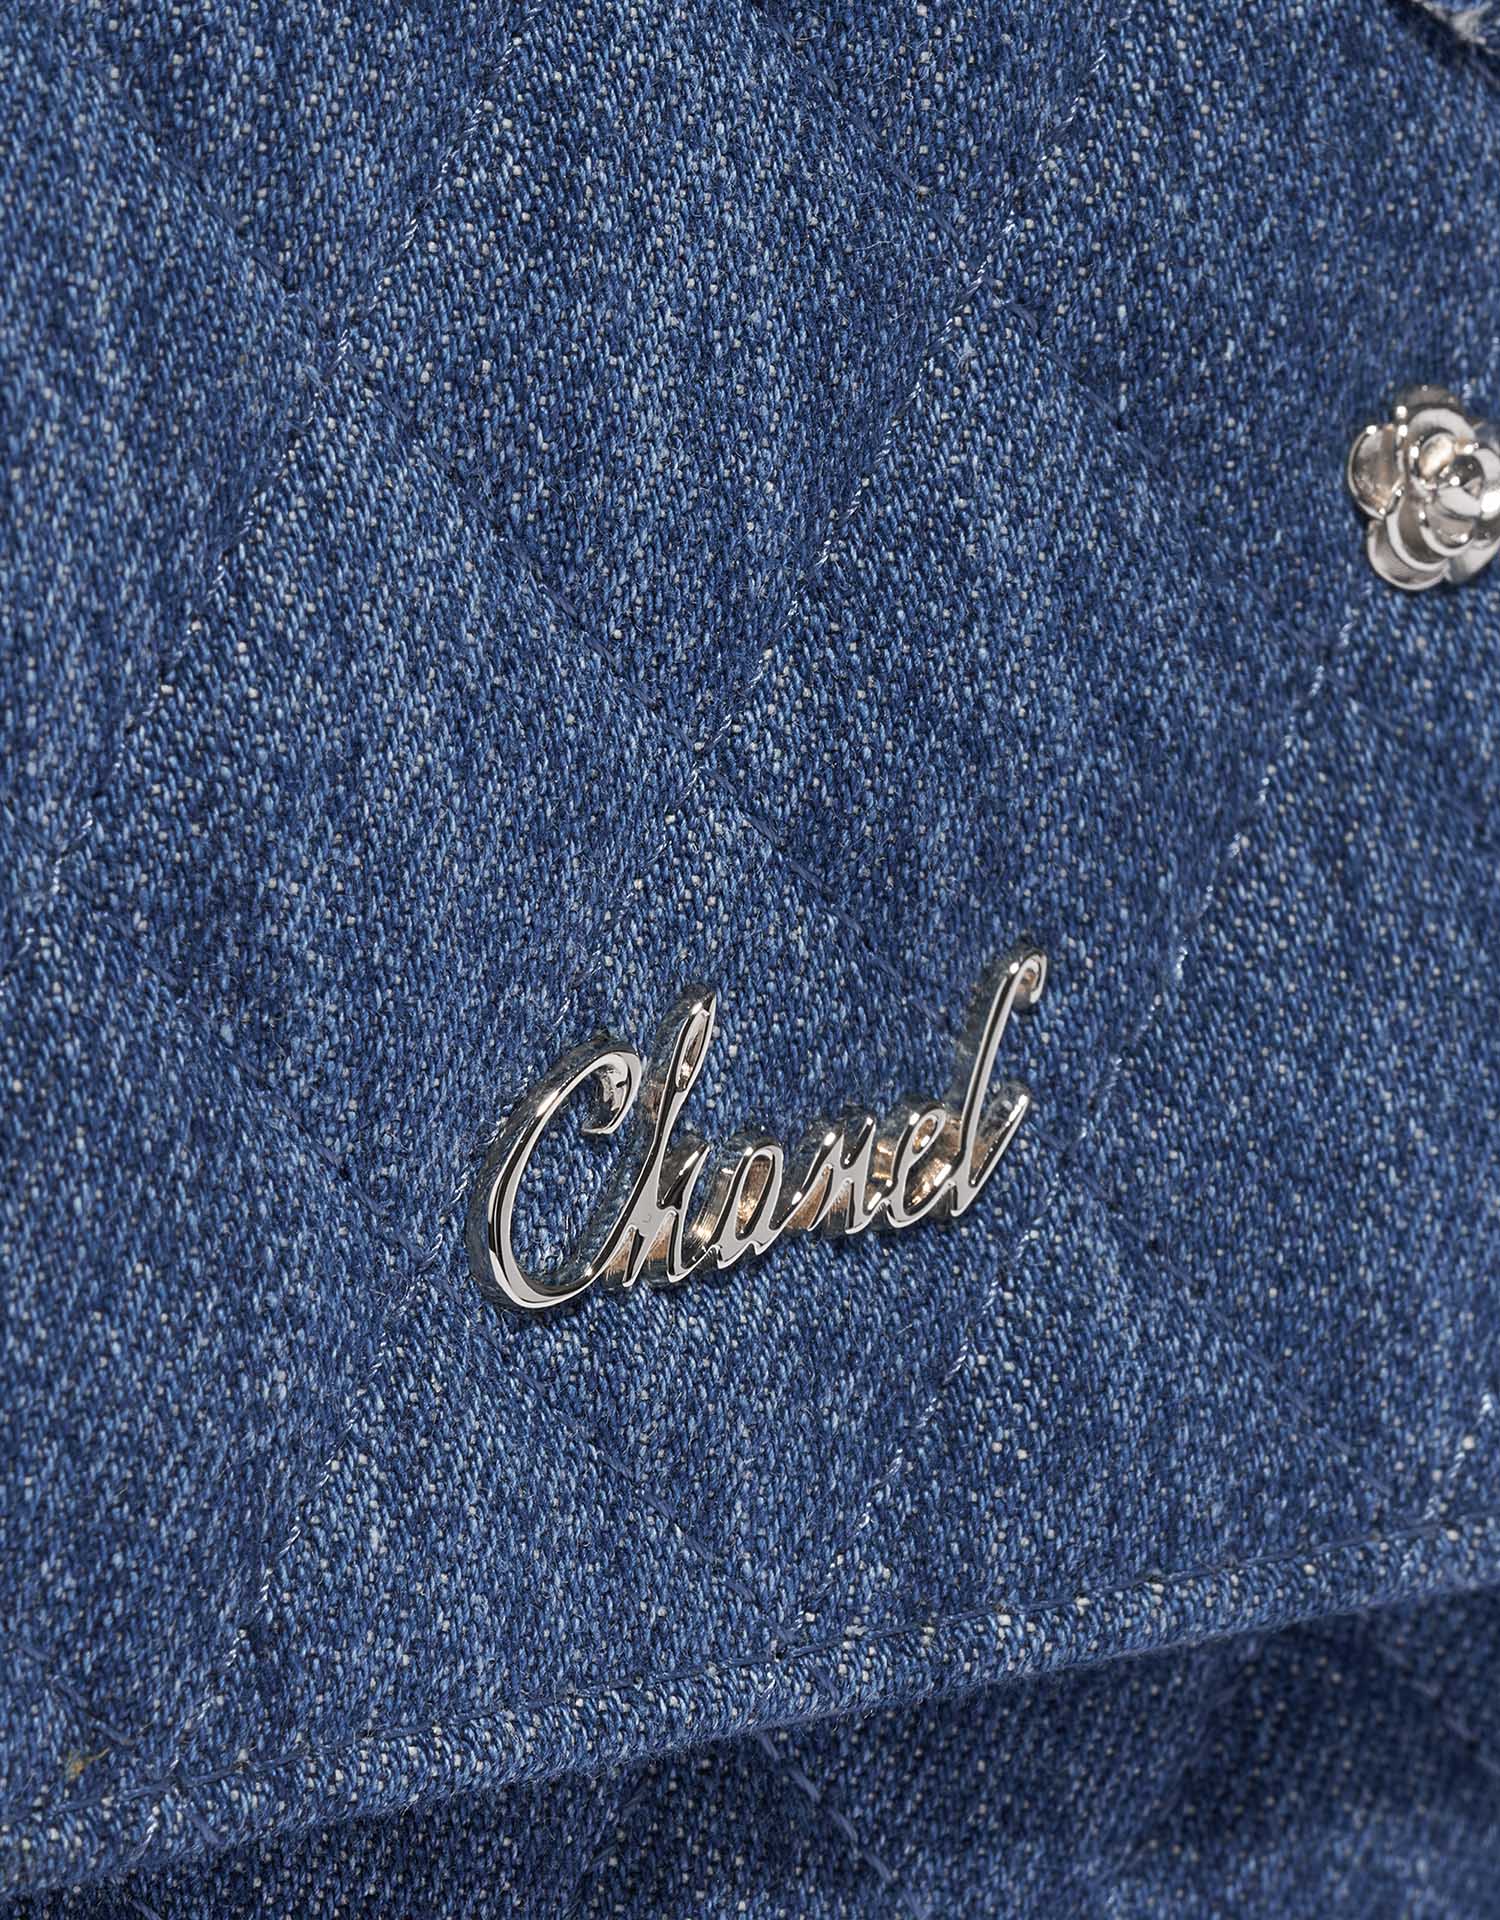 Chanel Boy Medium Patent Leather Blue | SACLÀB